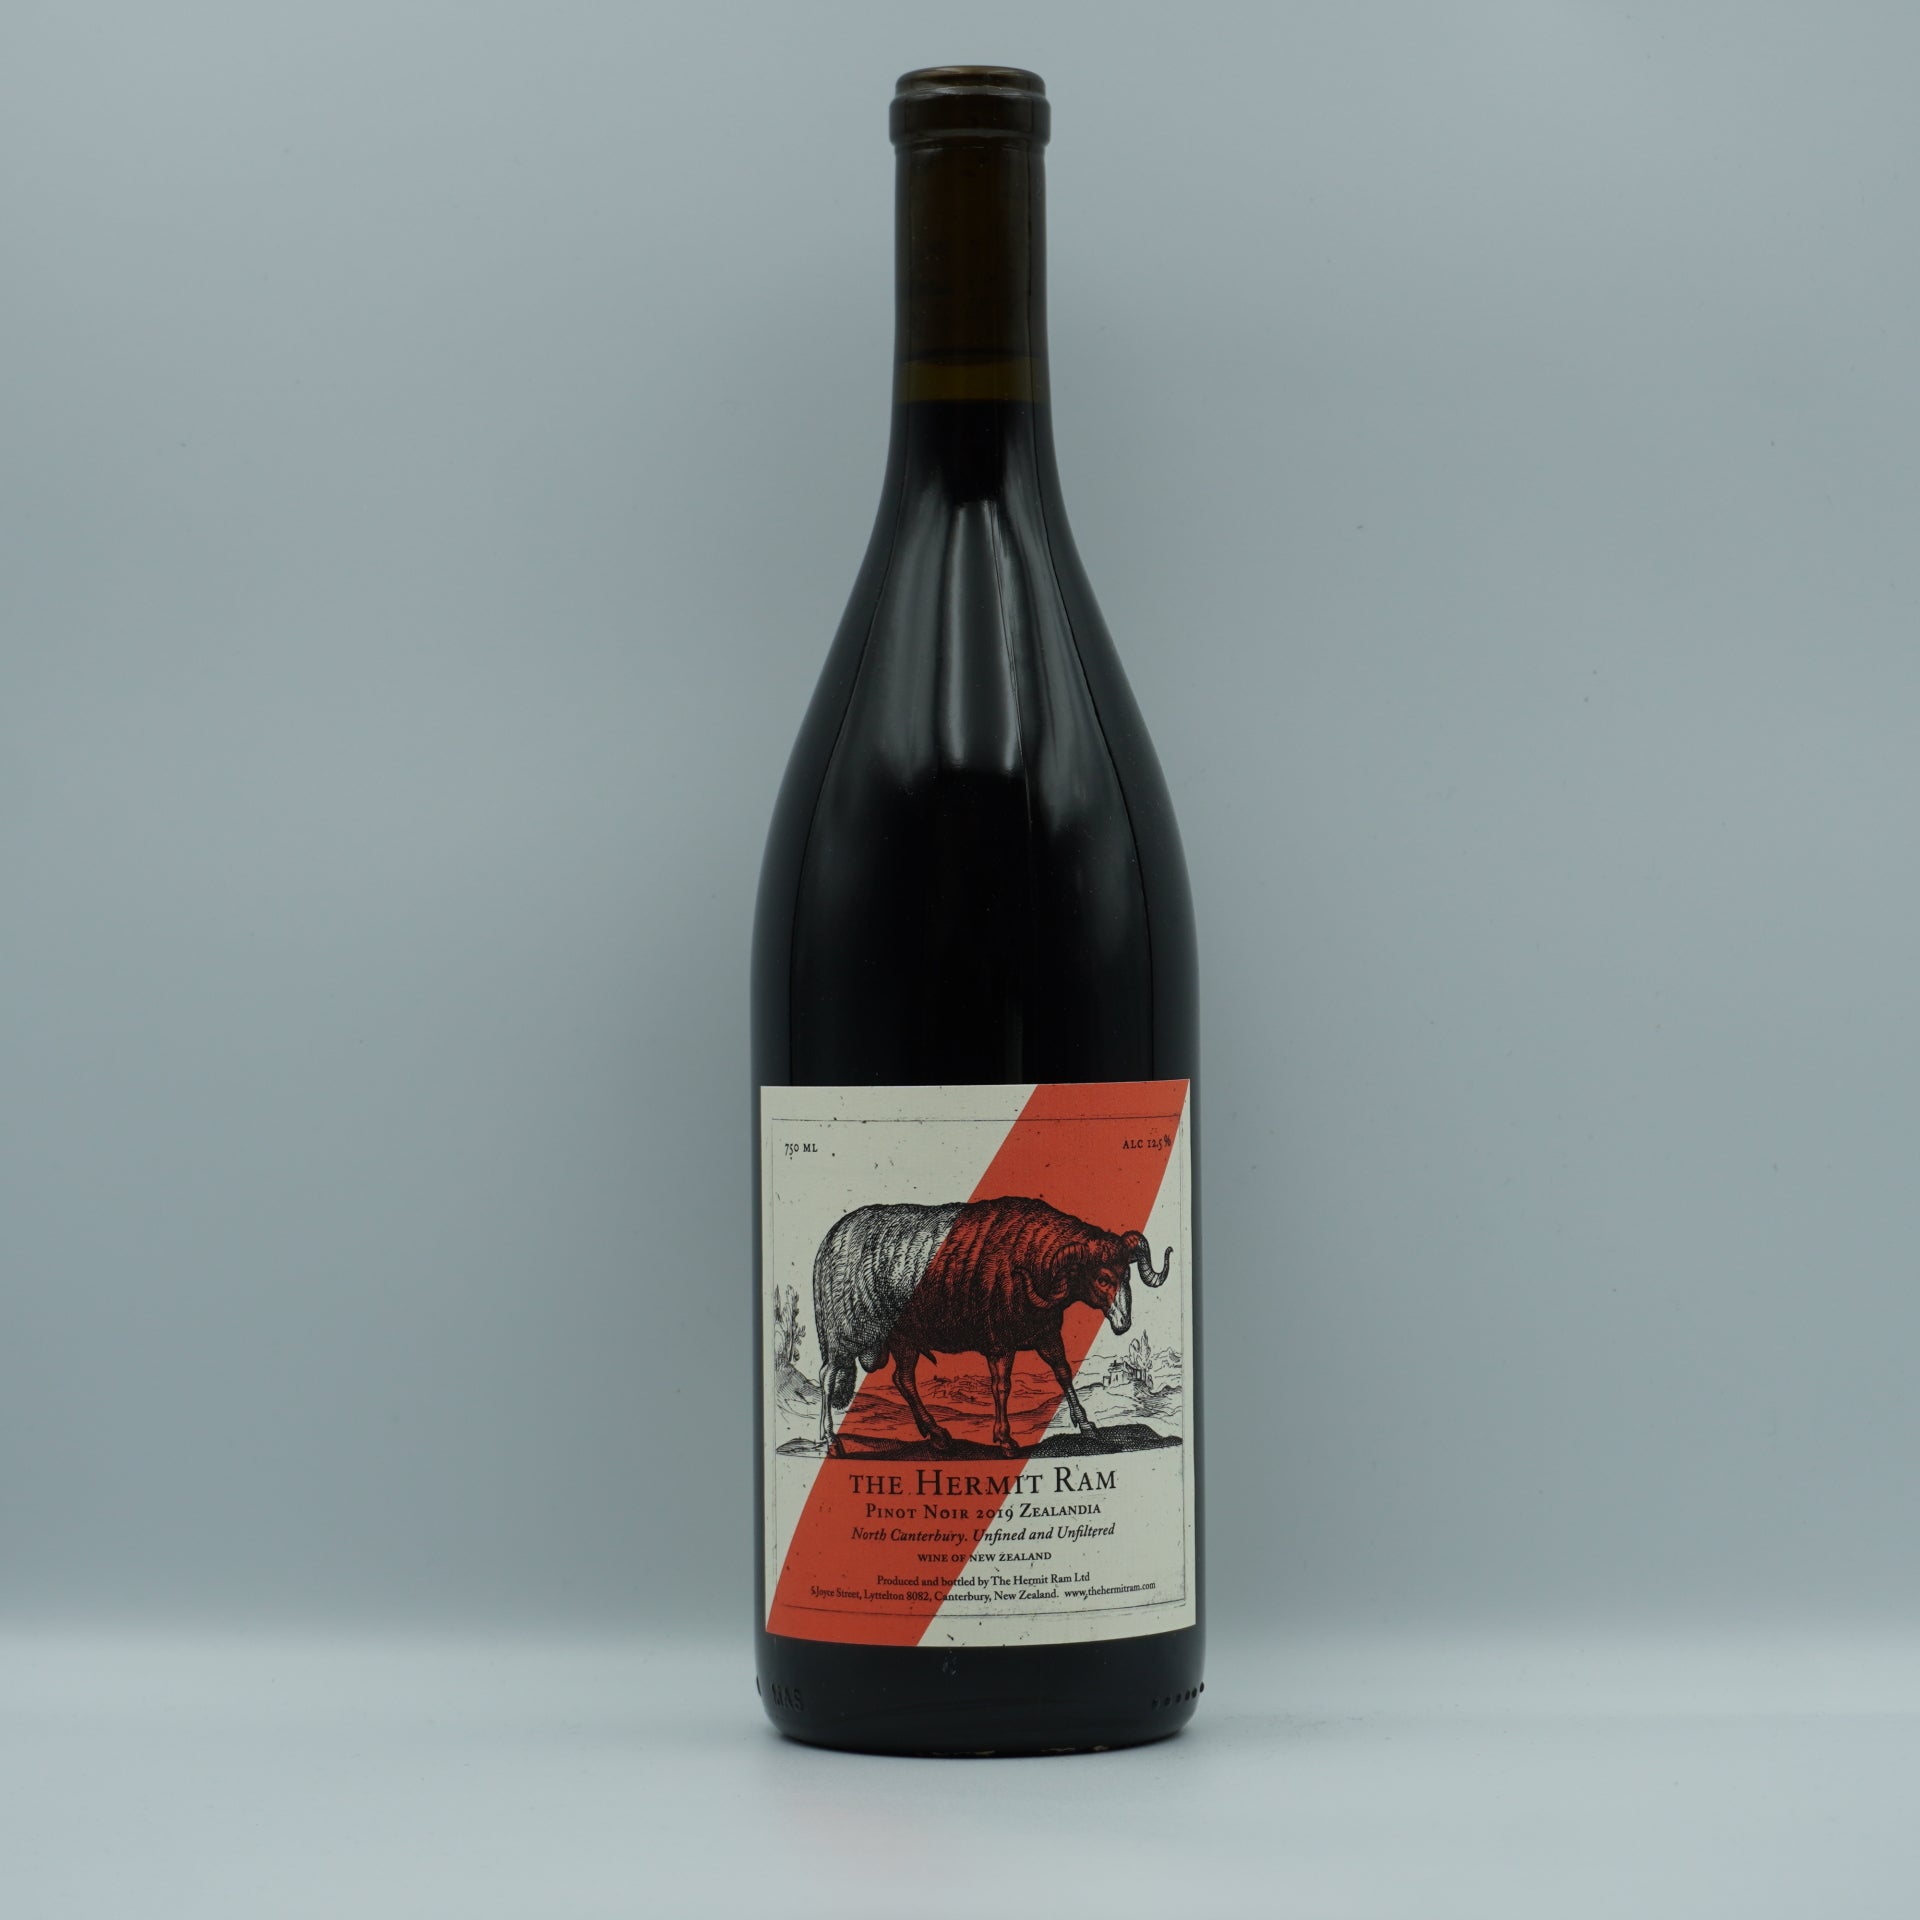 The Hermit Ram, Pinot Noir 'Zealandia' 2019